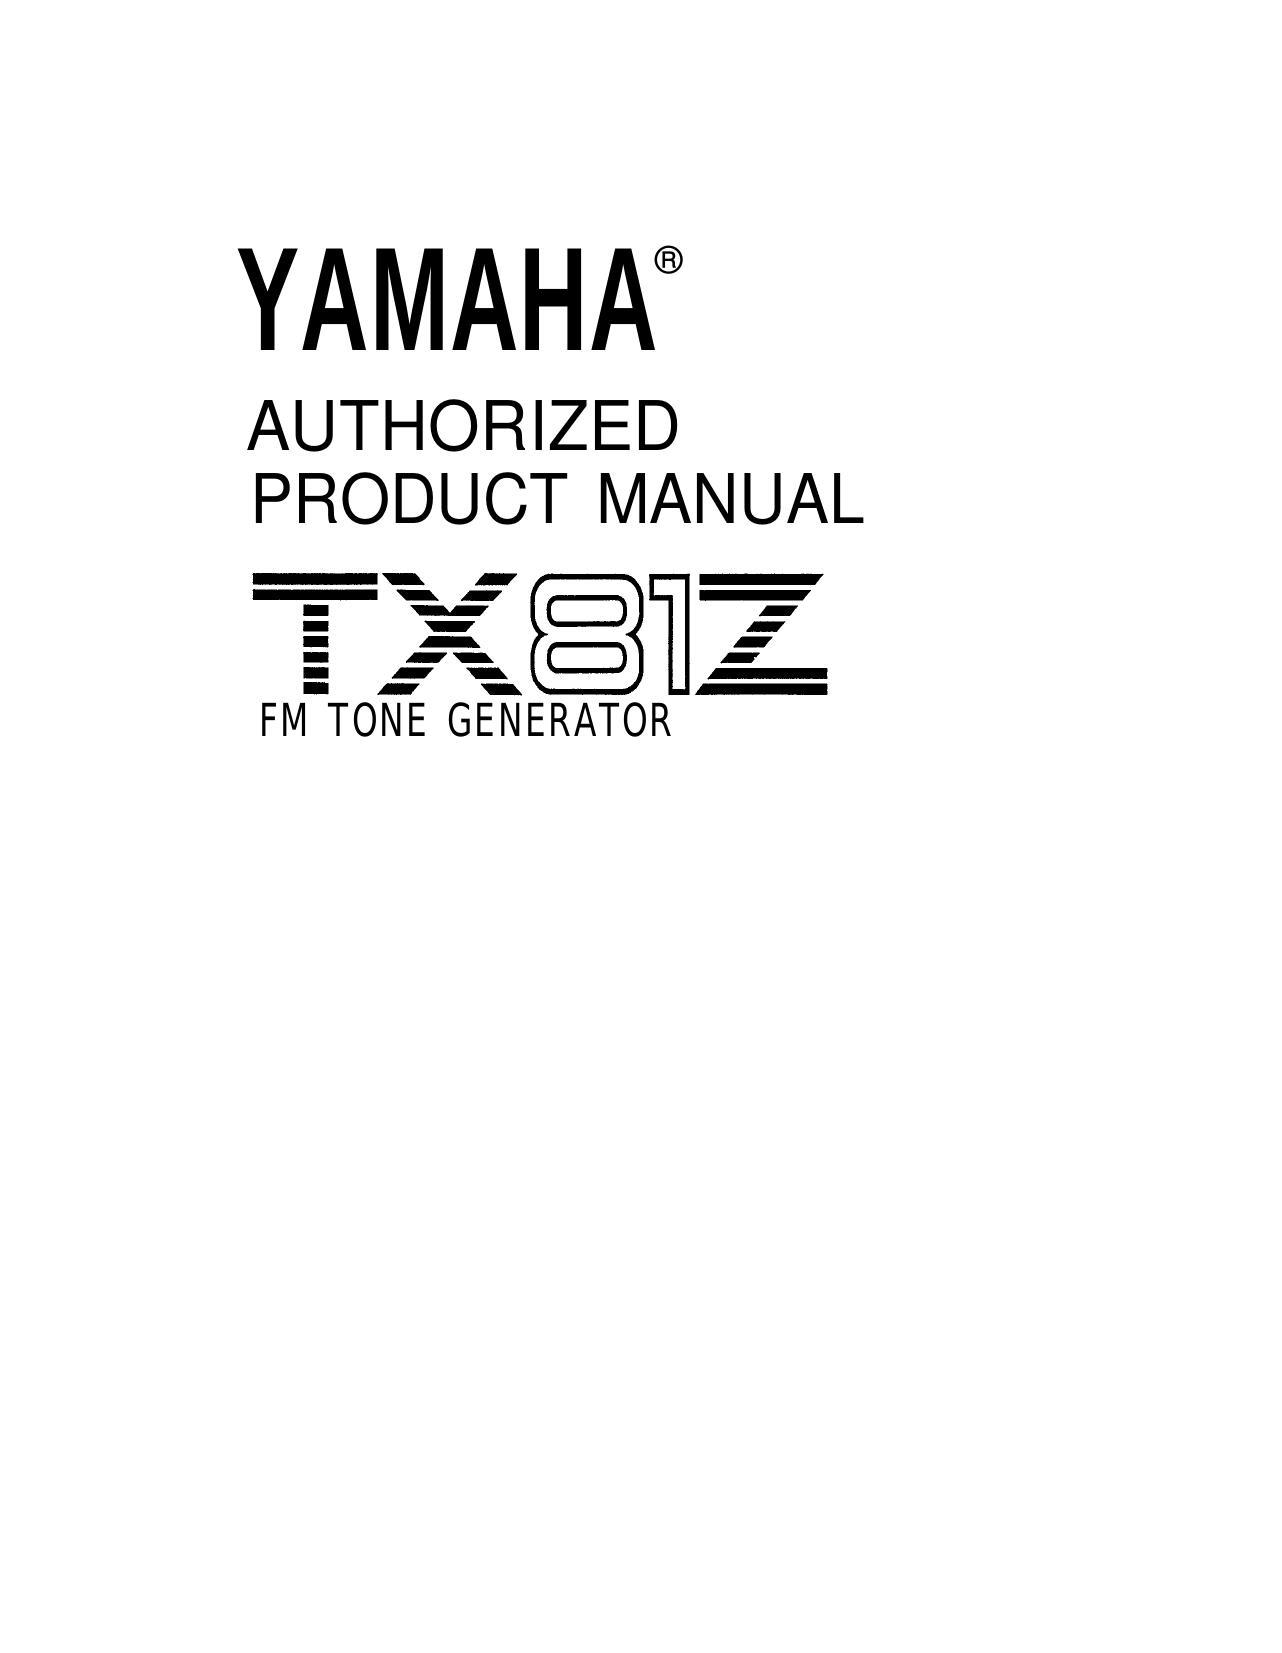 tx81z-fm-tone-generator-owners-manual.pdf